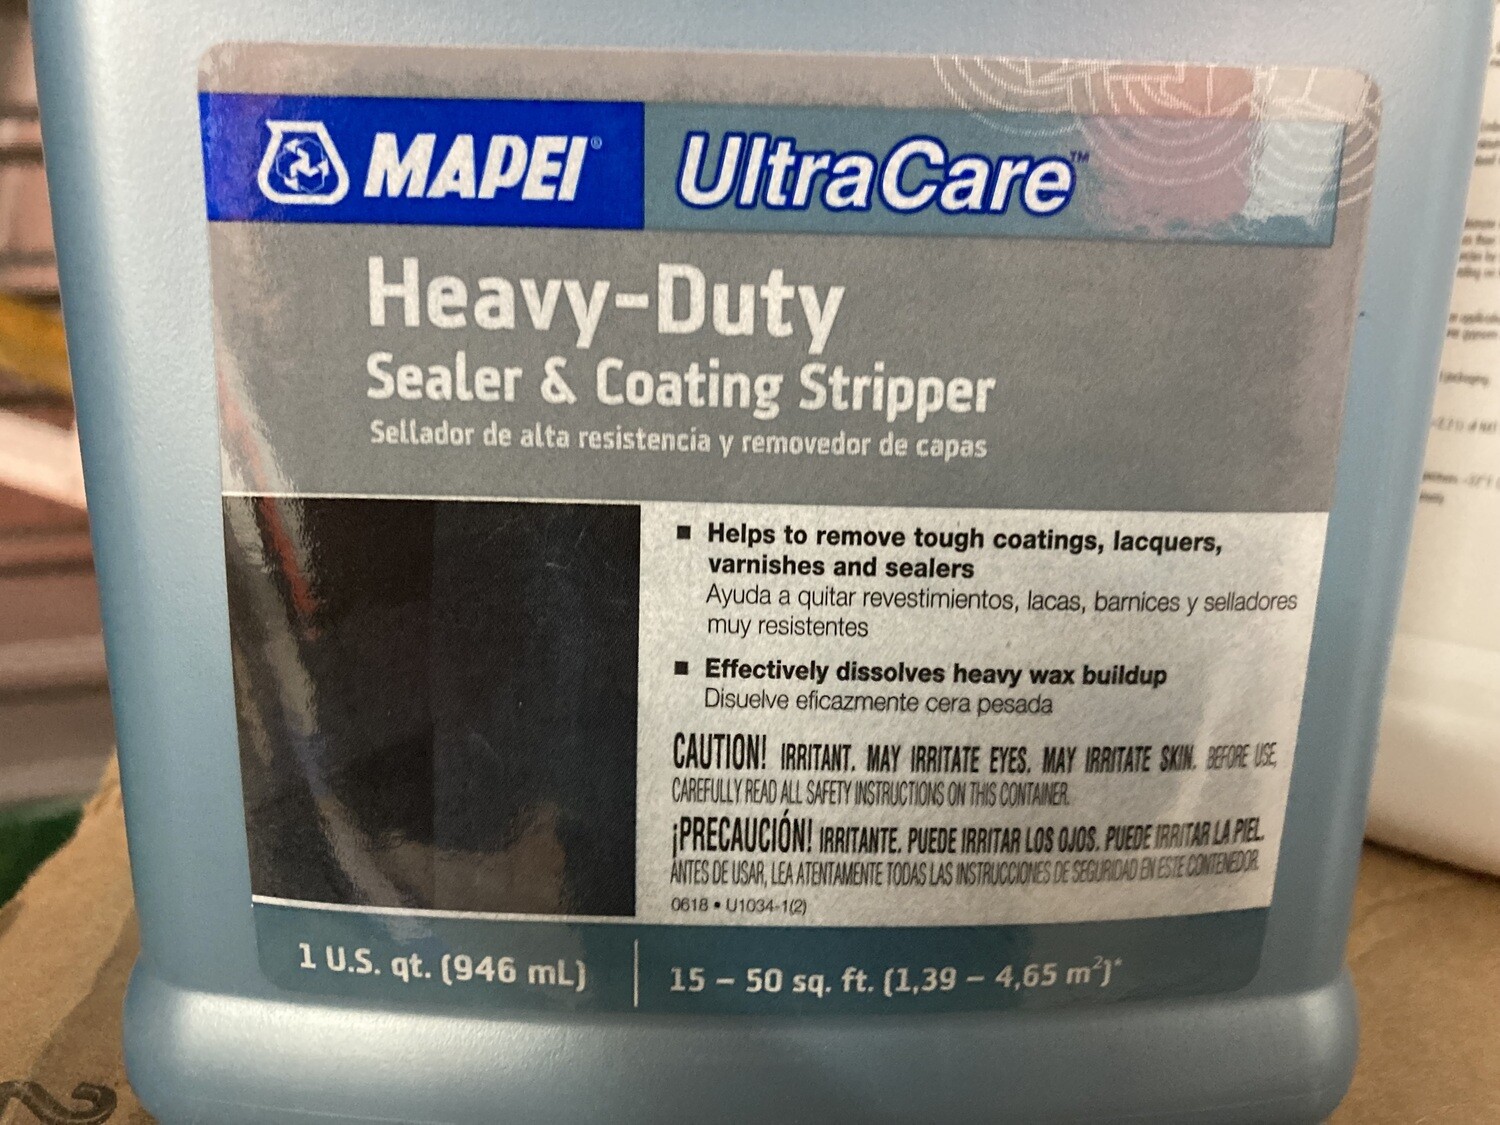 Madei Heavy-Duty Sealer & Coating Stripper, 1 quart #1268